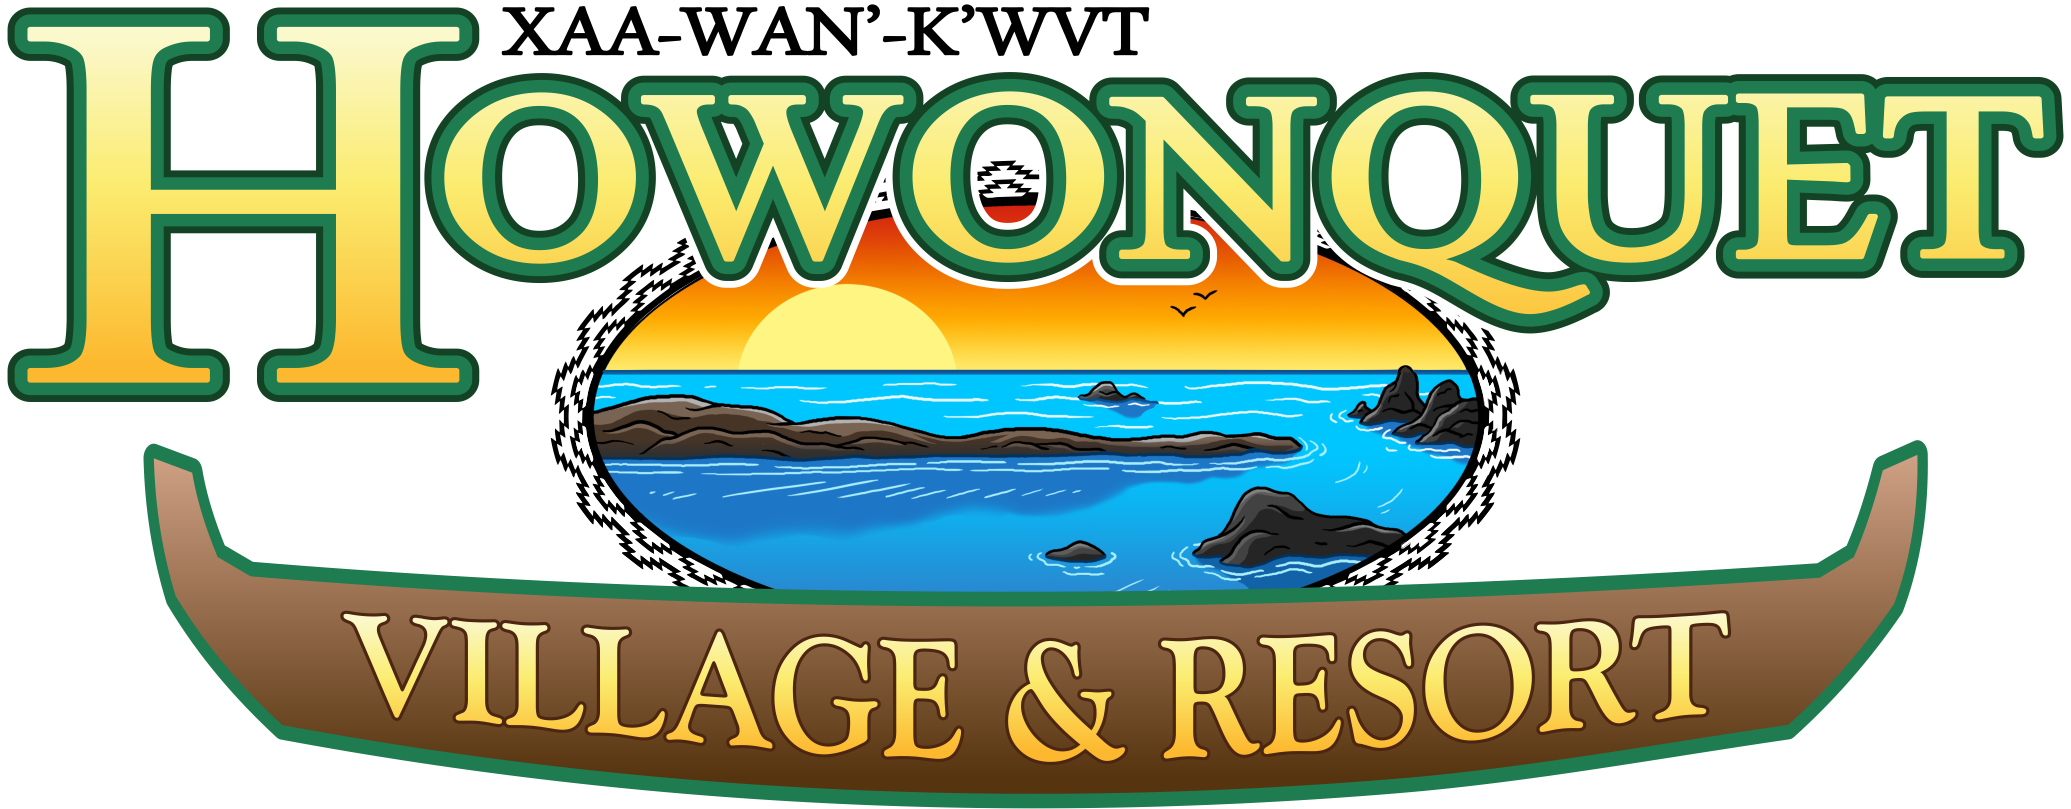 Xaa-wan'-k'wvt Village & Resort